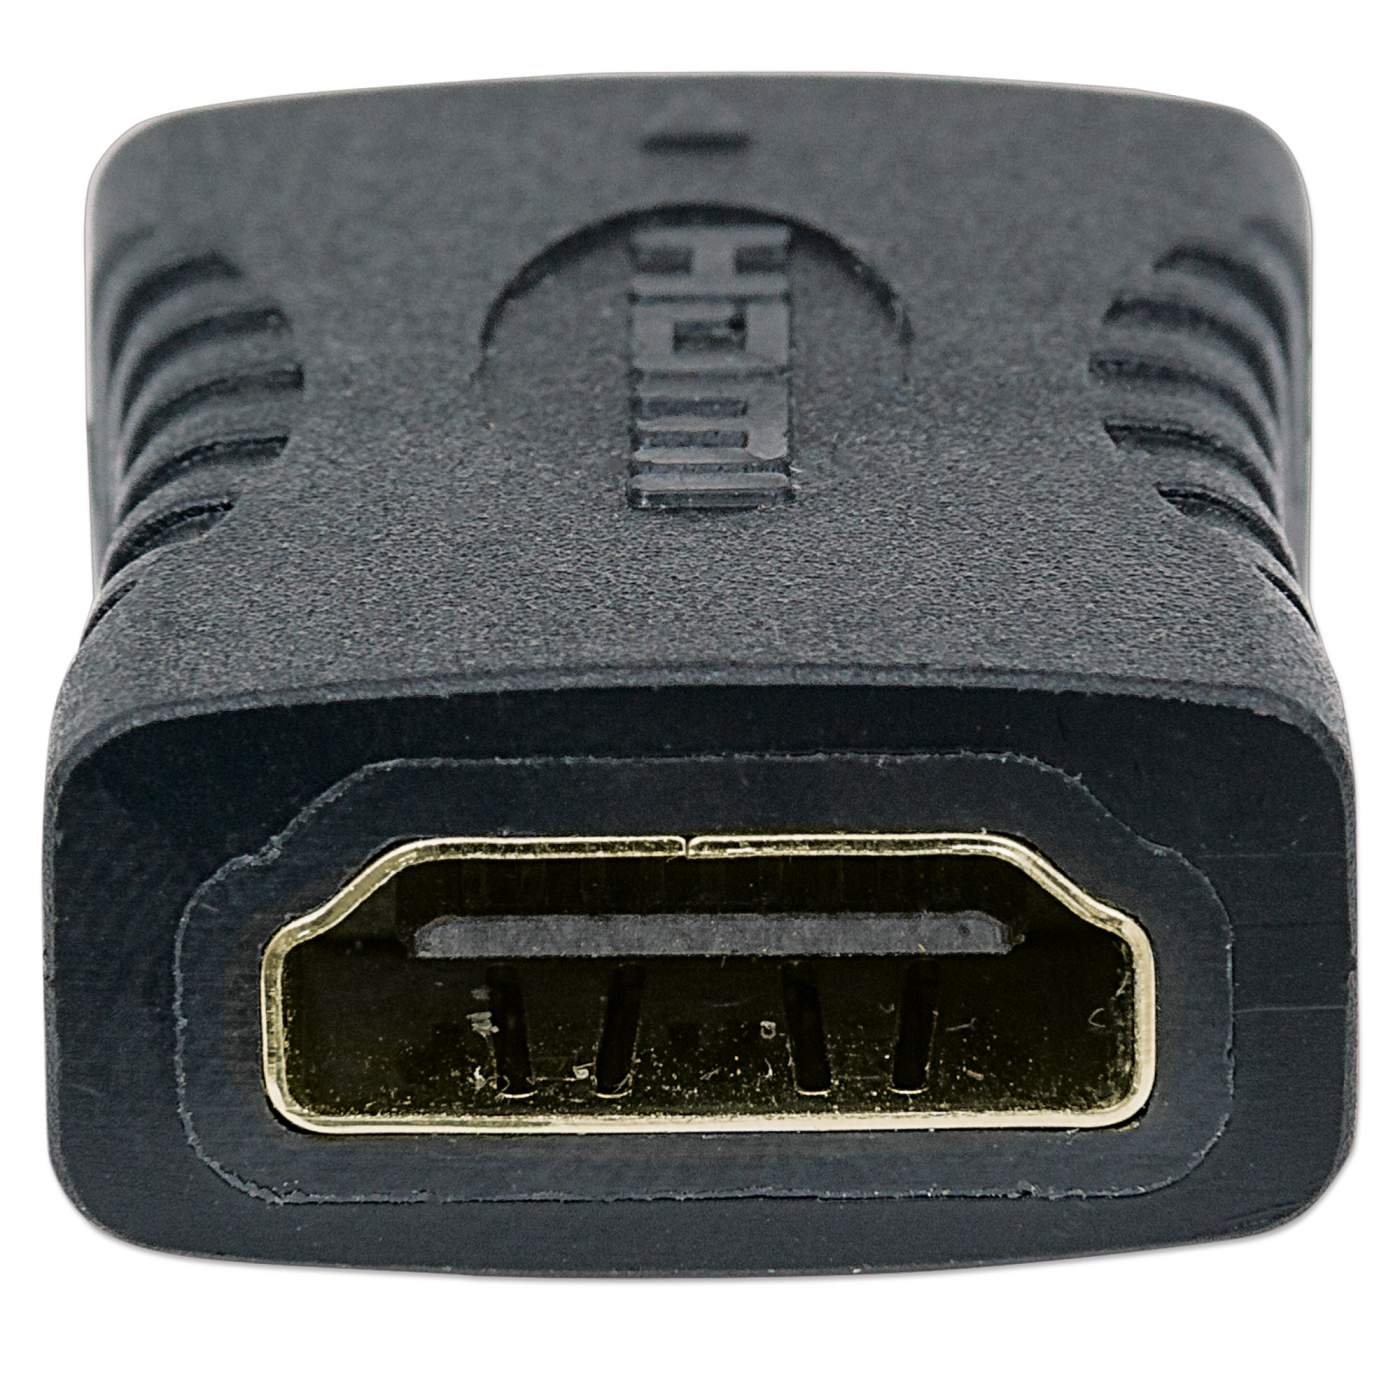 HDMI Coupler Image 7